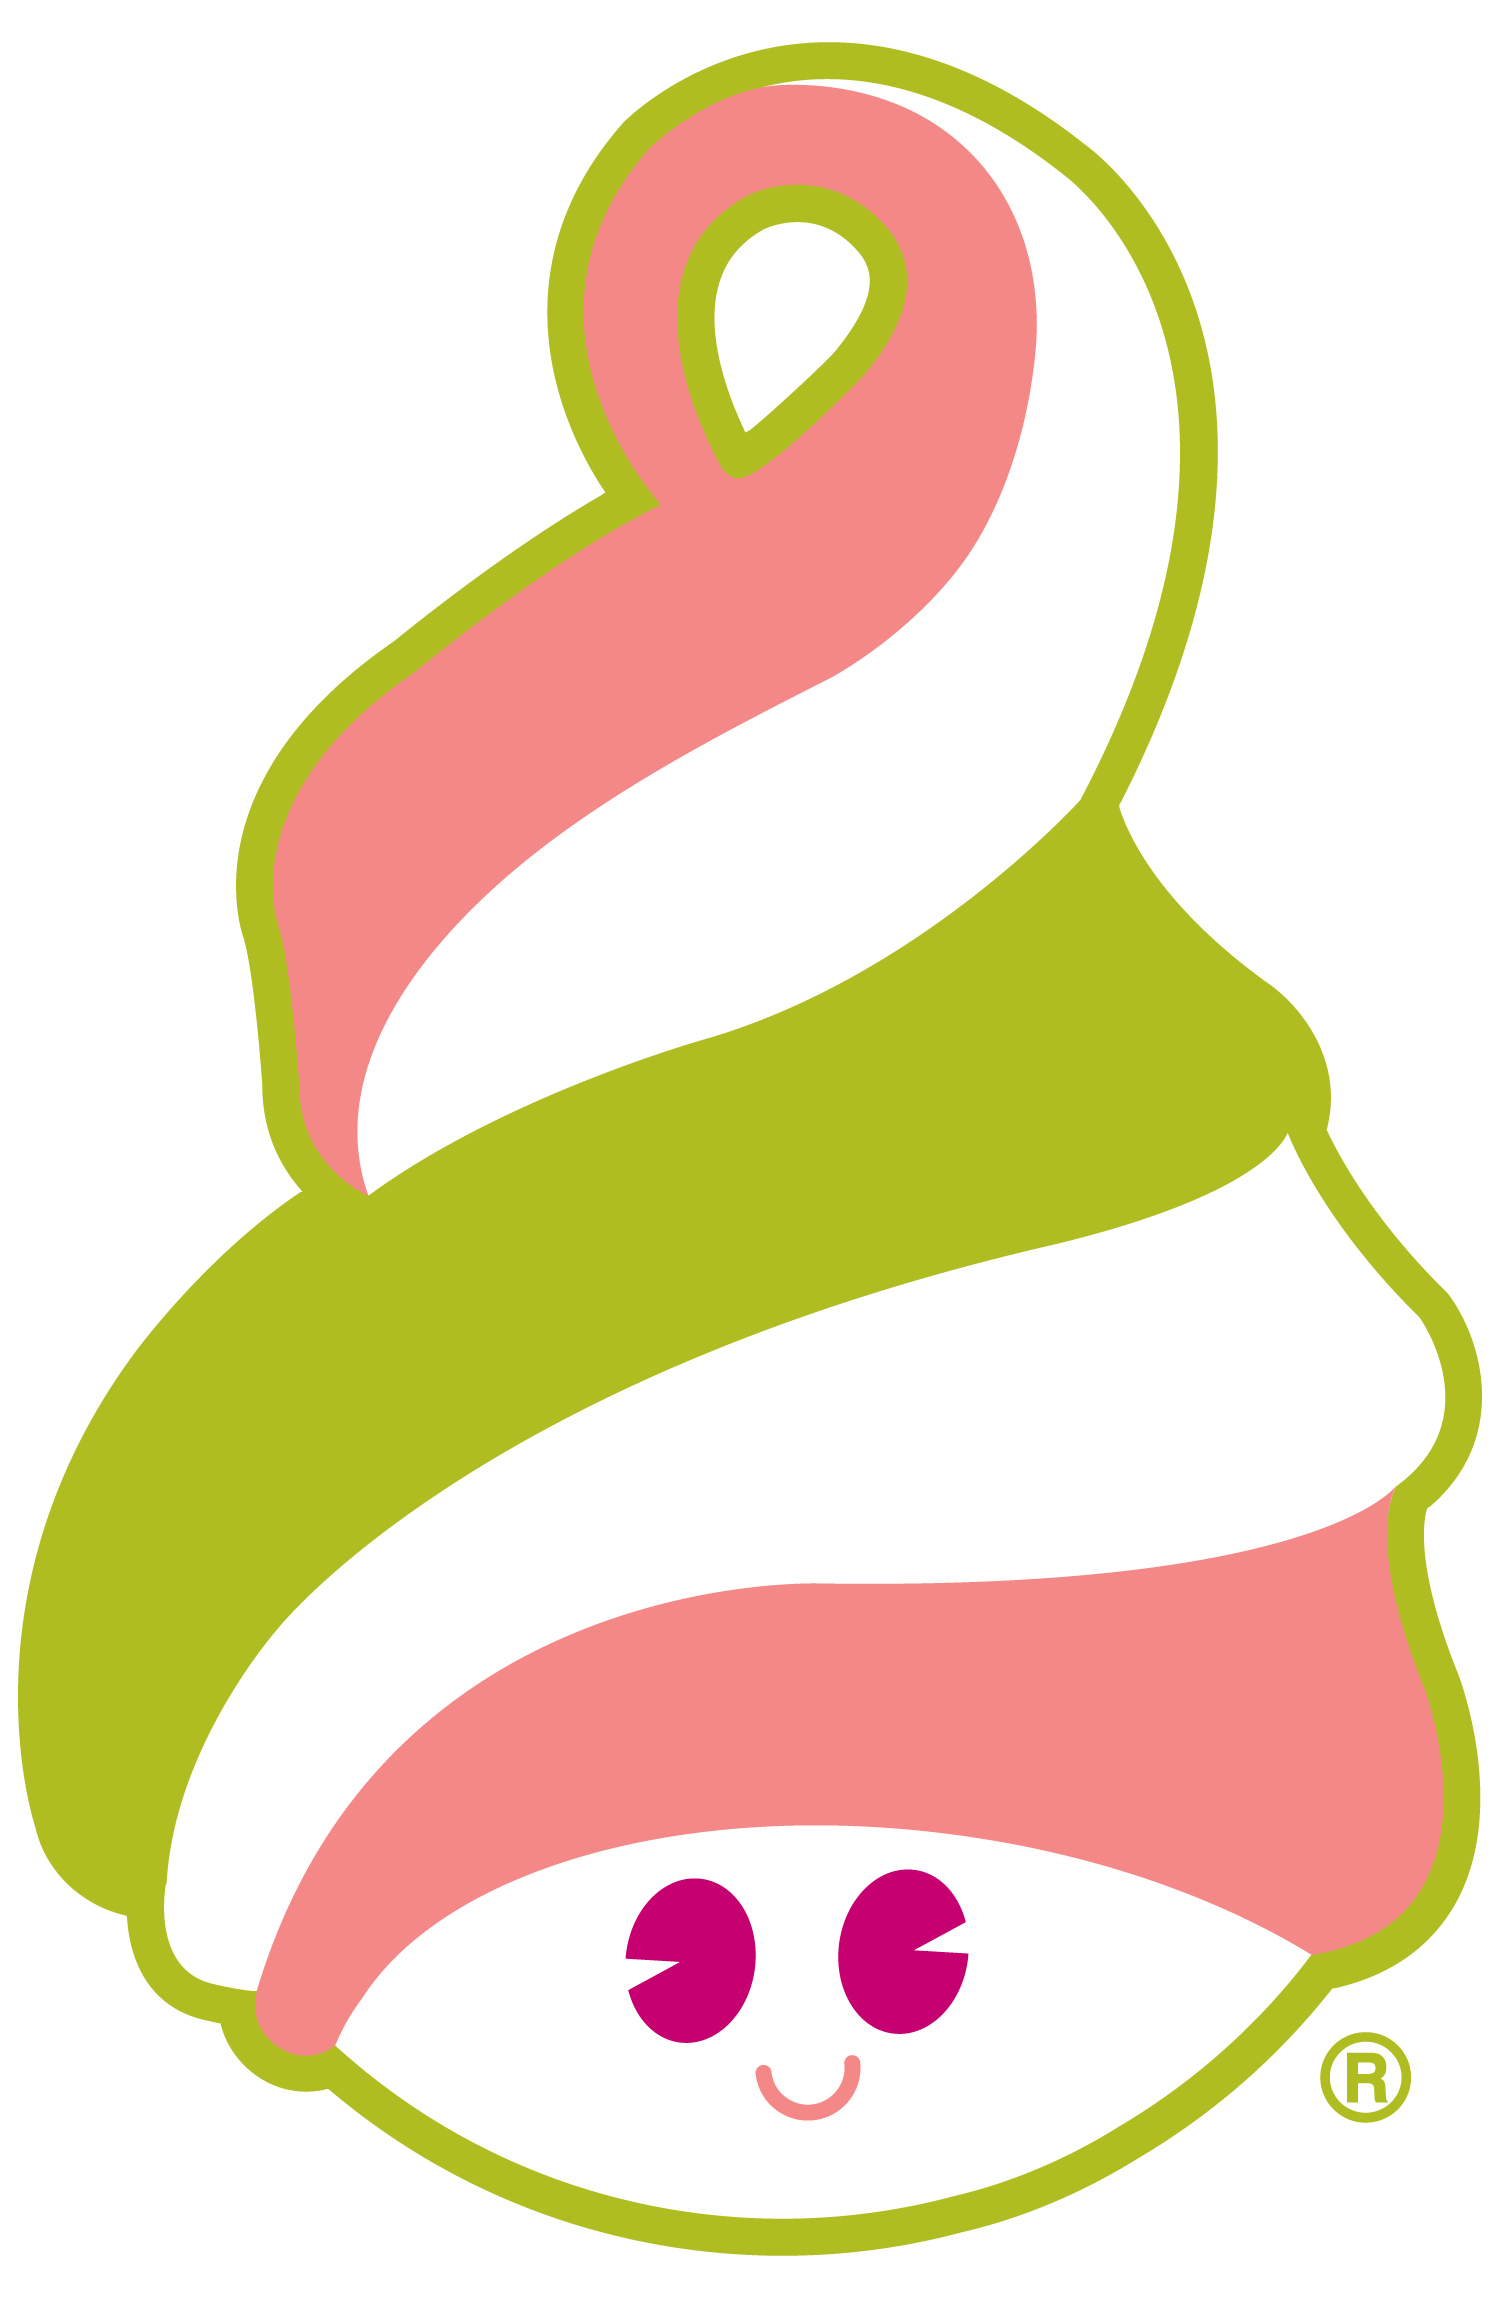 yogurt clip art free - photo #39